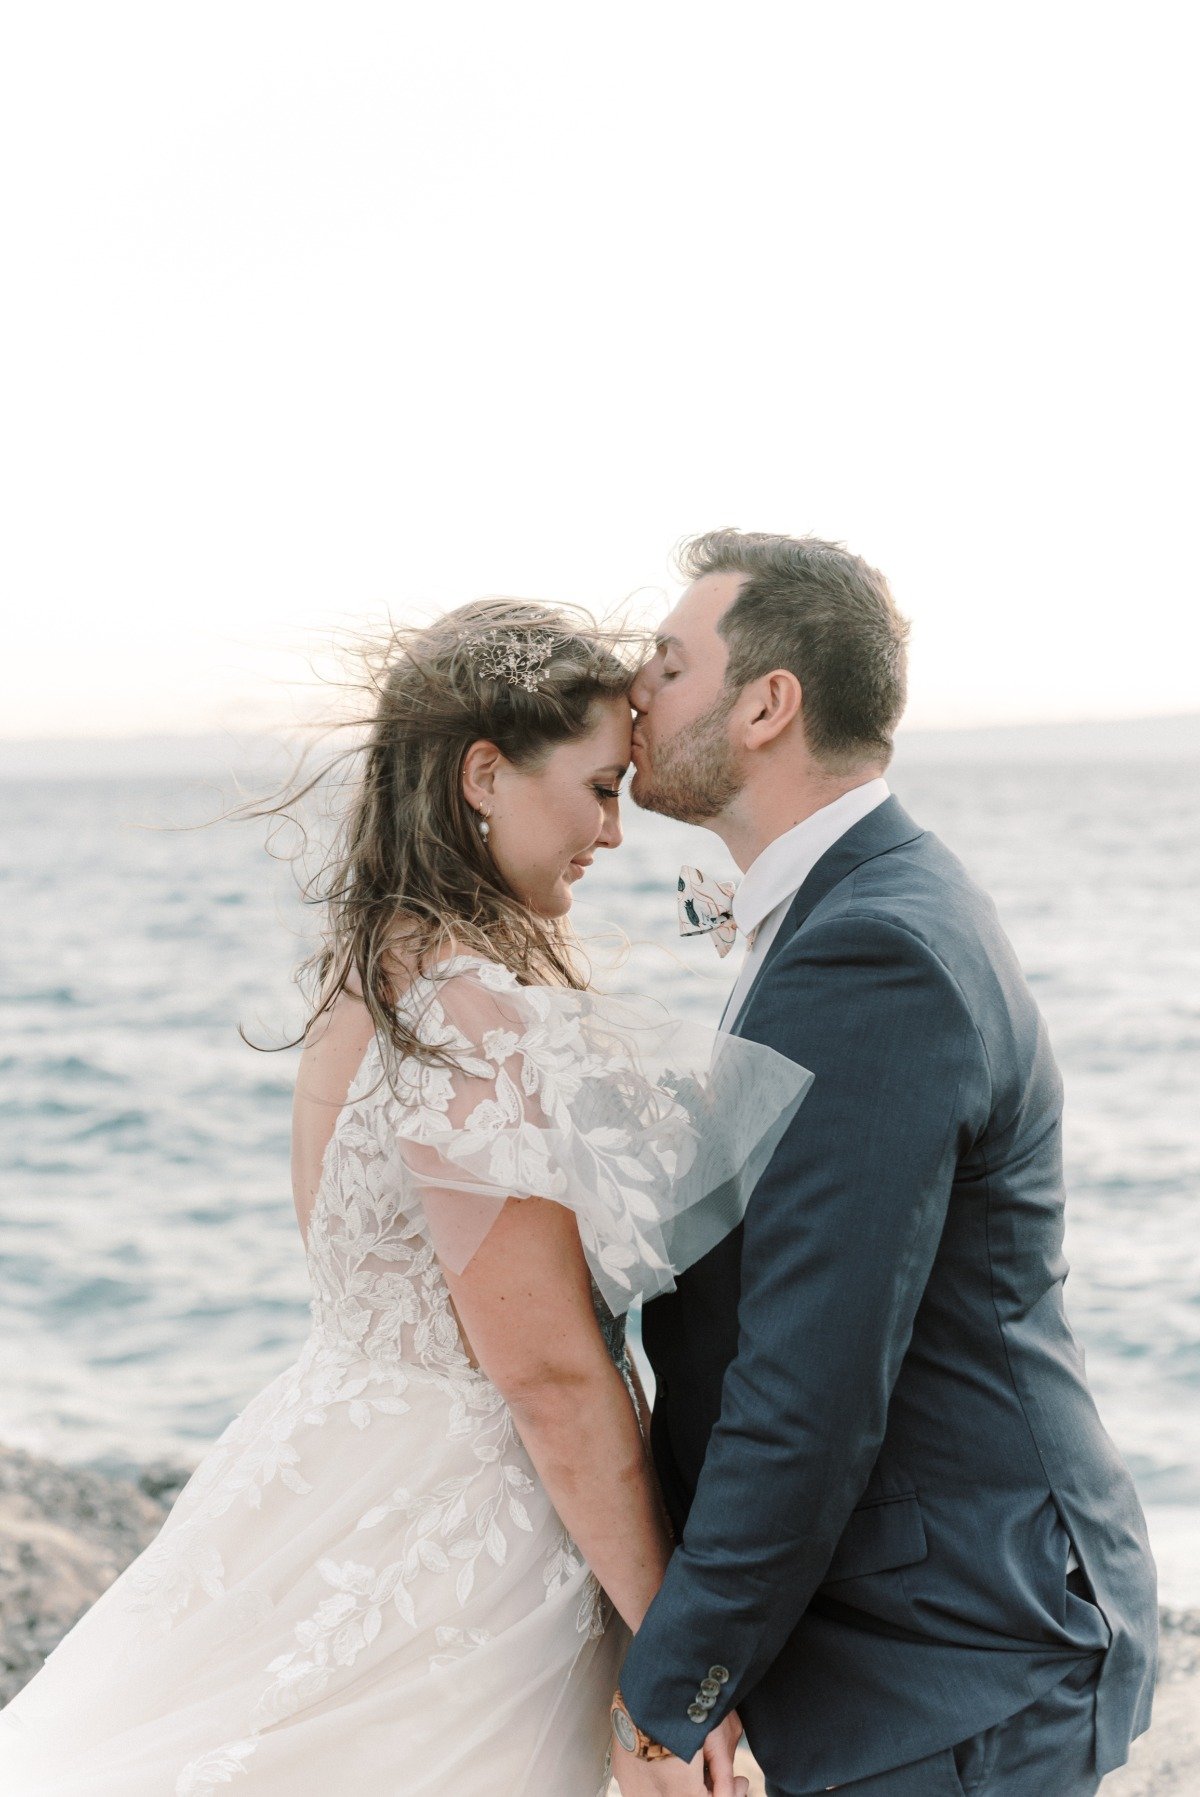 This earthy Greek wedding felt like it was on its own private island